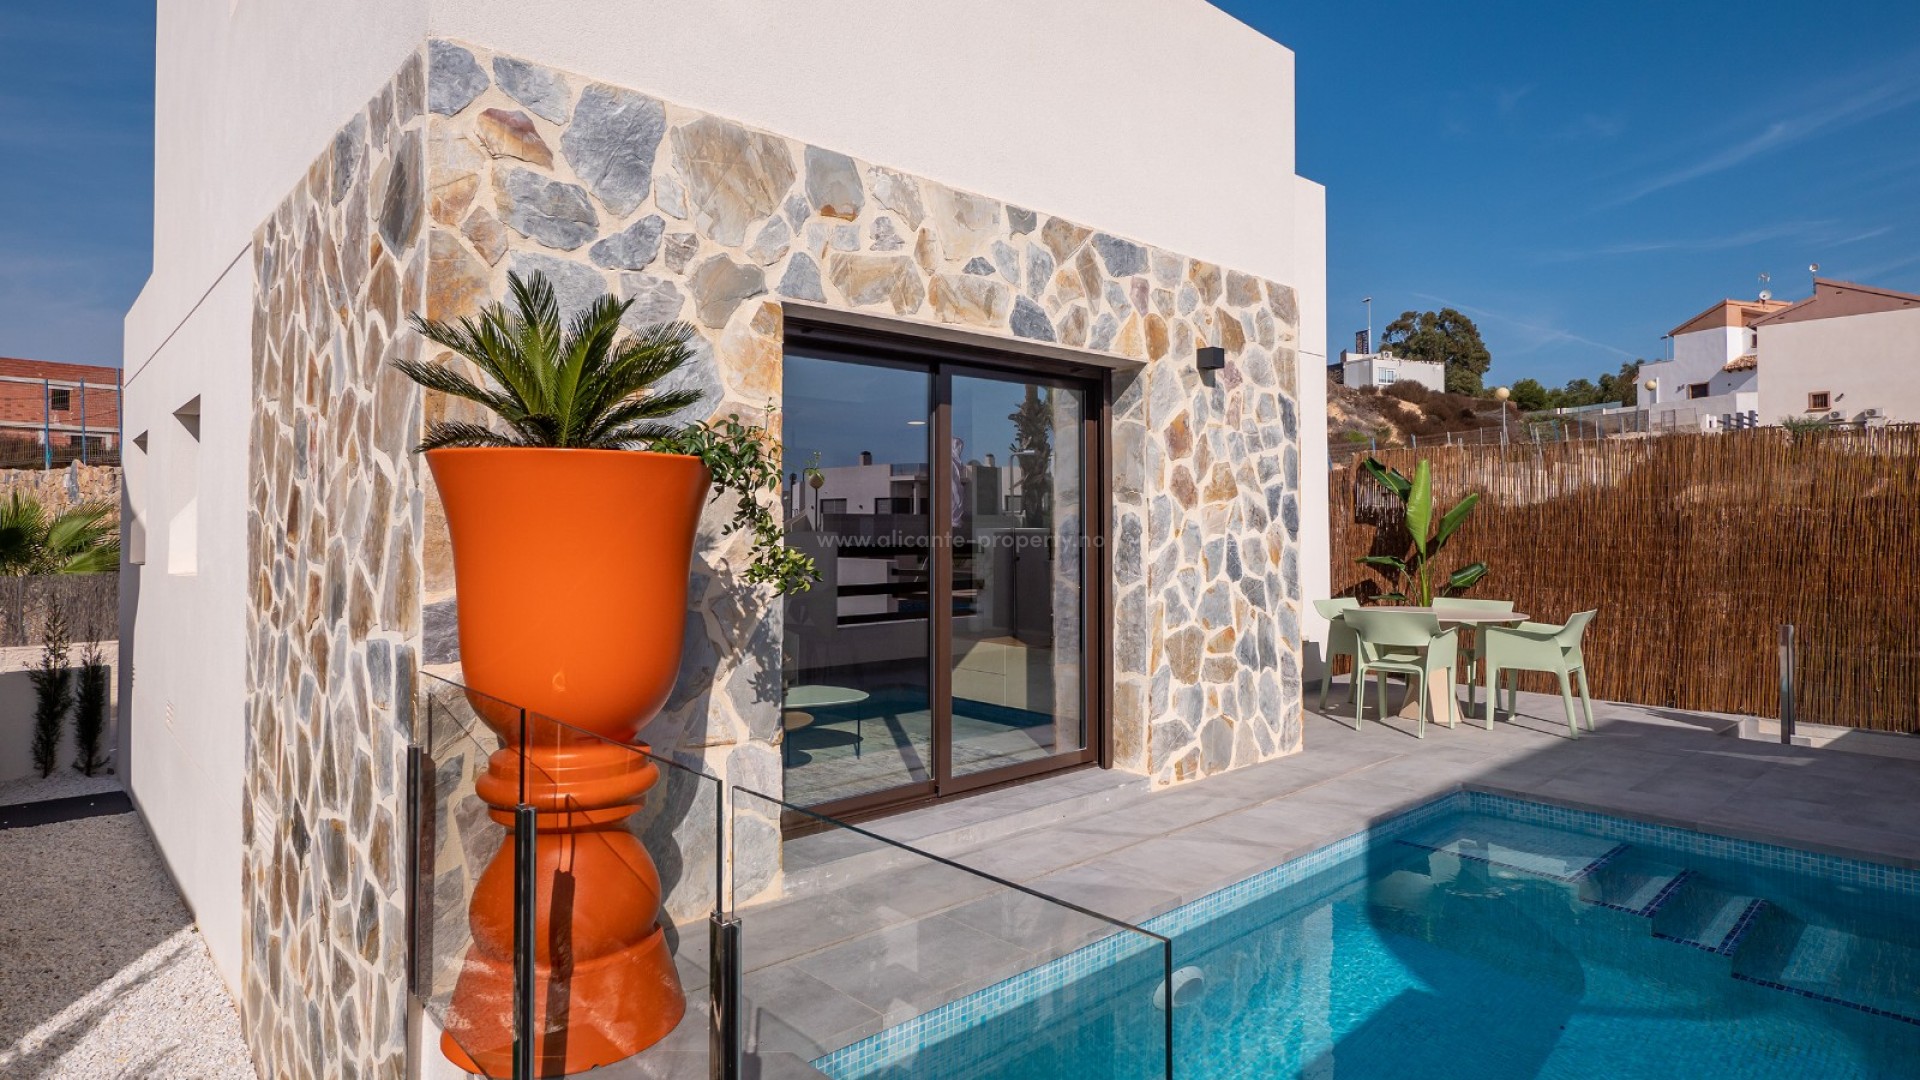 Hus/villa i Villamartin med 3 soverom og 2 bad, privat hage og basseng. Boligene ligger ved golfbanen i Villamartin. 30min fra Alicante flyplass.